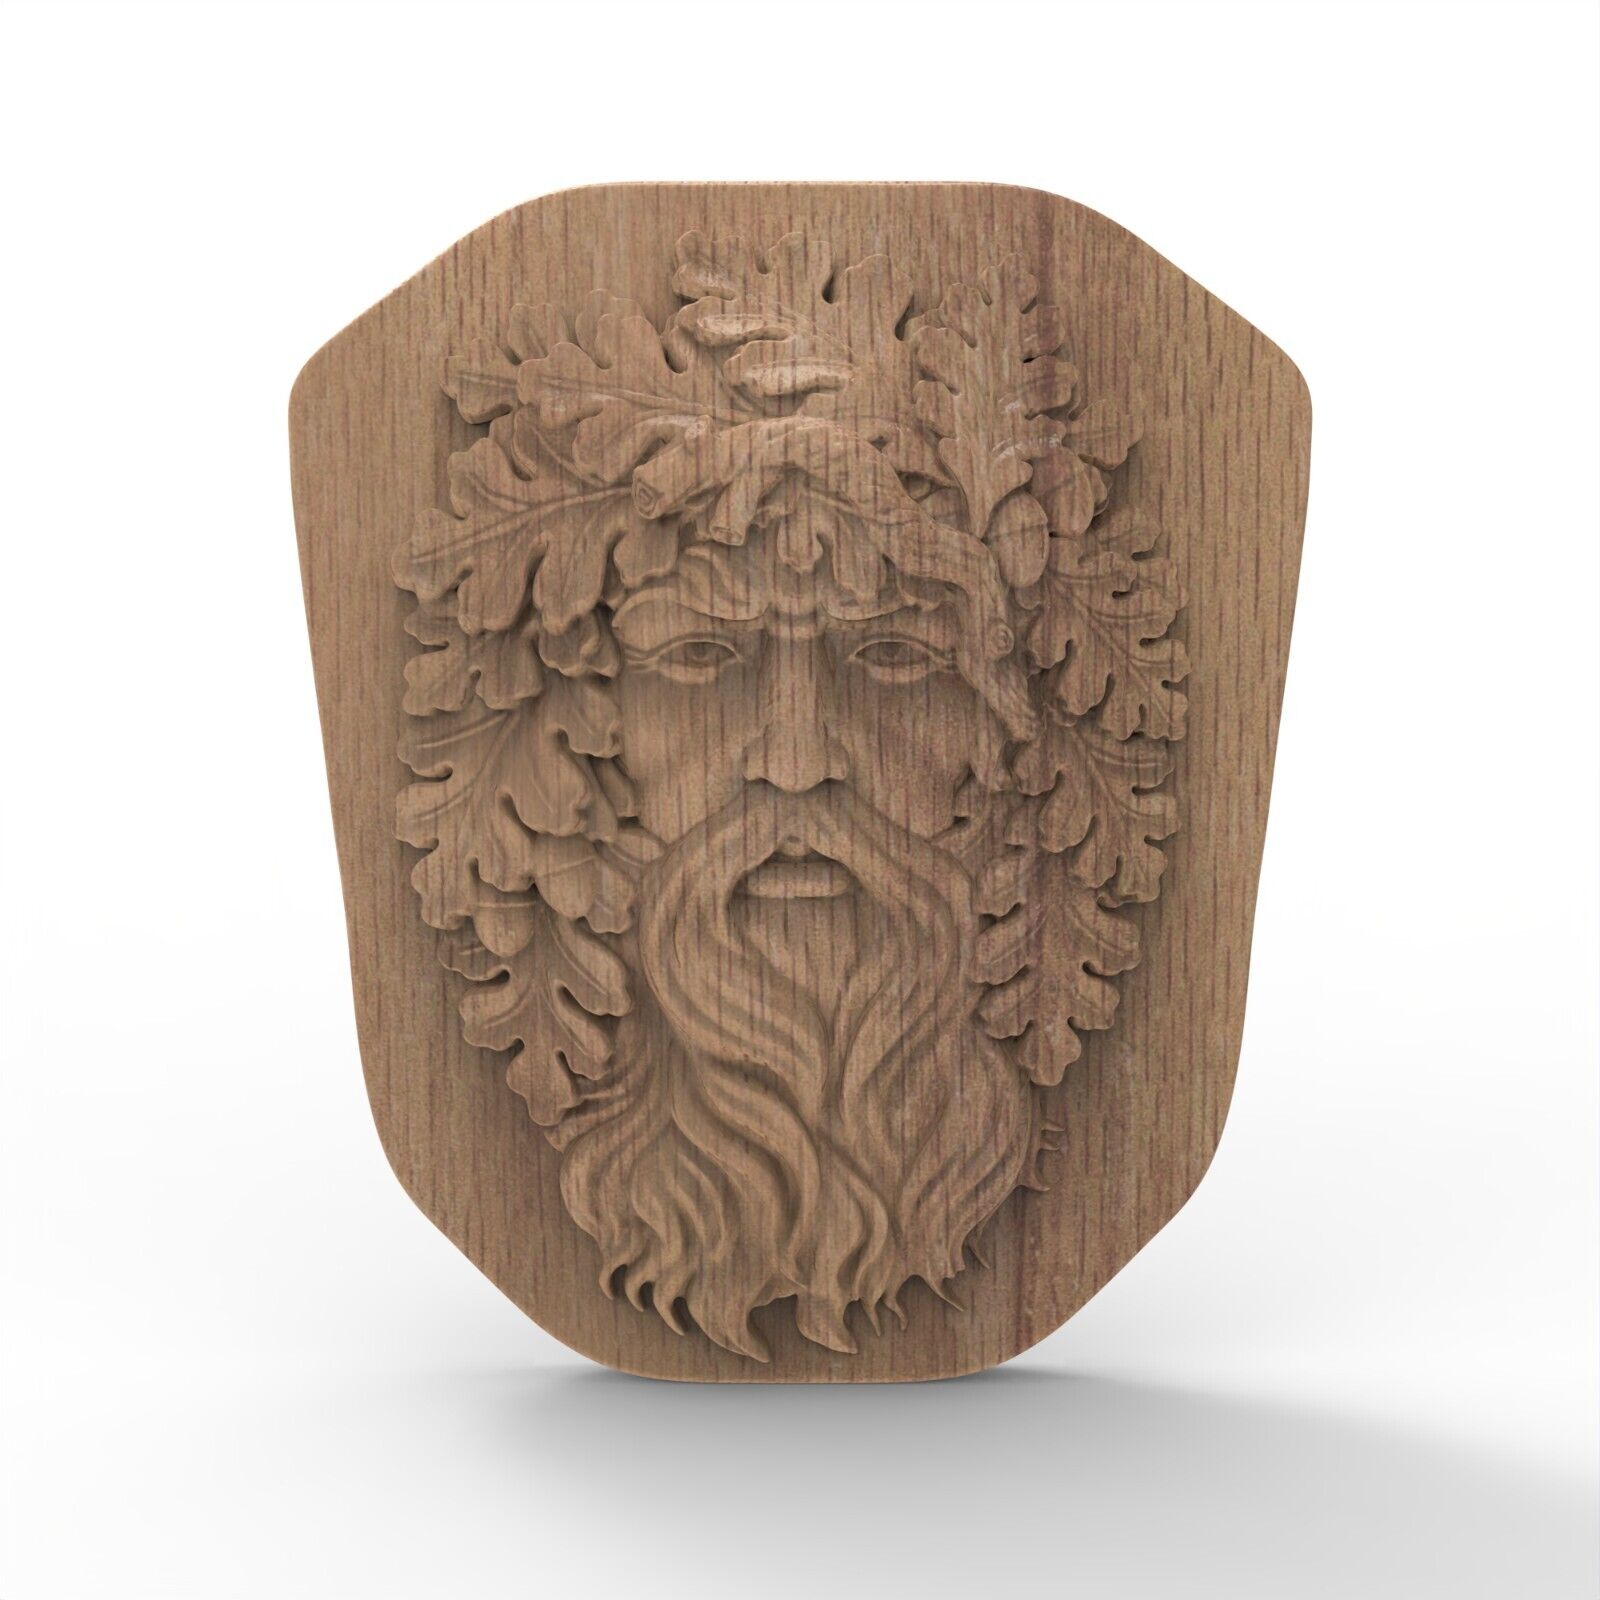 Green Man Oak Leaf Garden Wall Plaque Handcrafted Wood Carving Furniture + Base